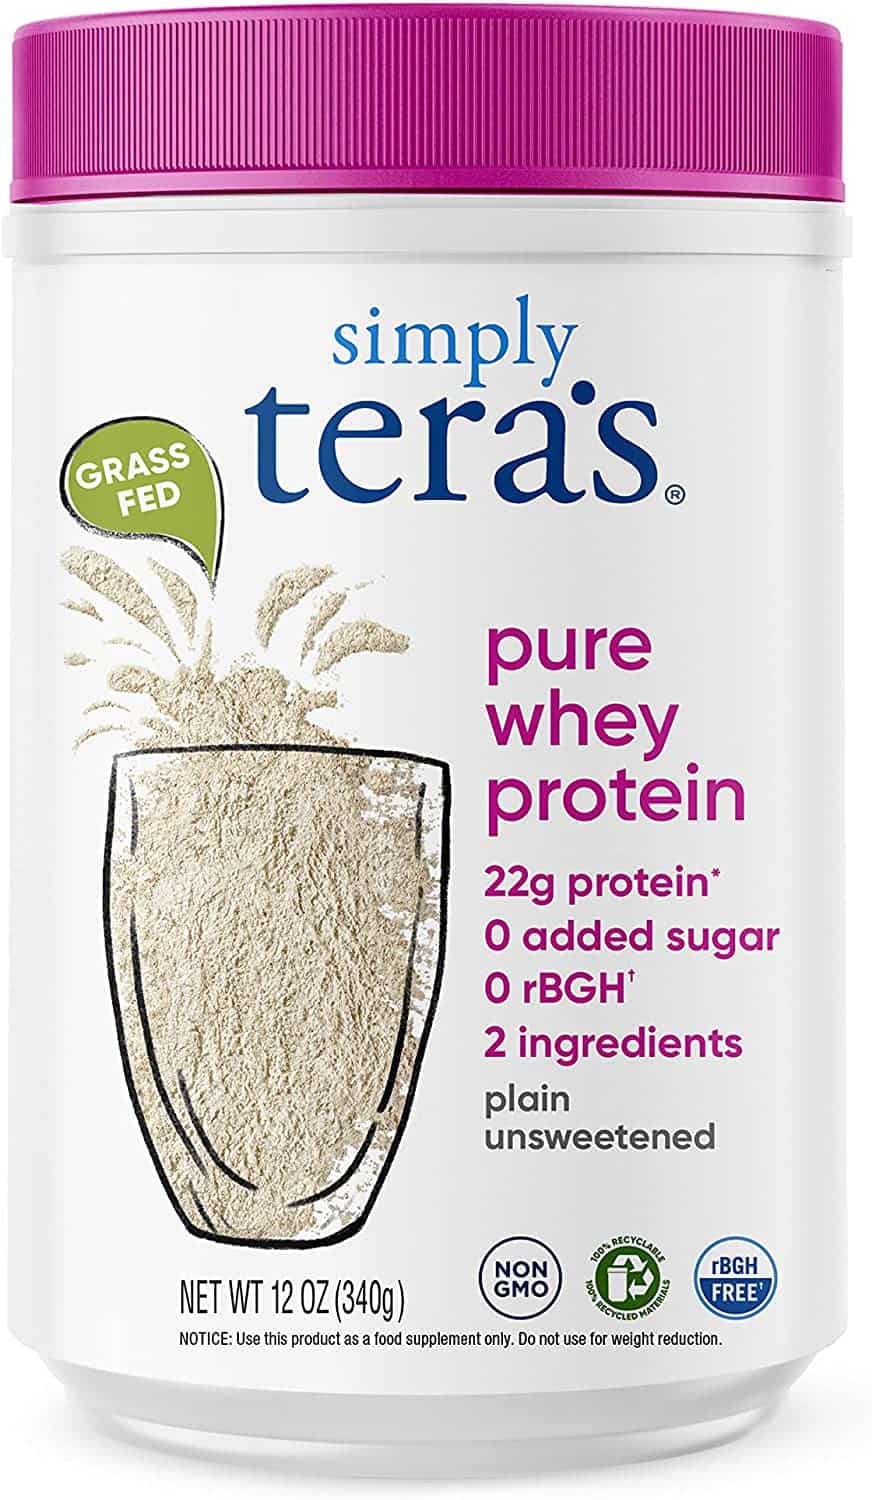 Simpy tera's pure whey protein powder.